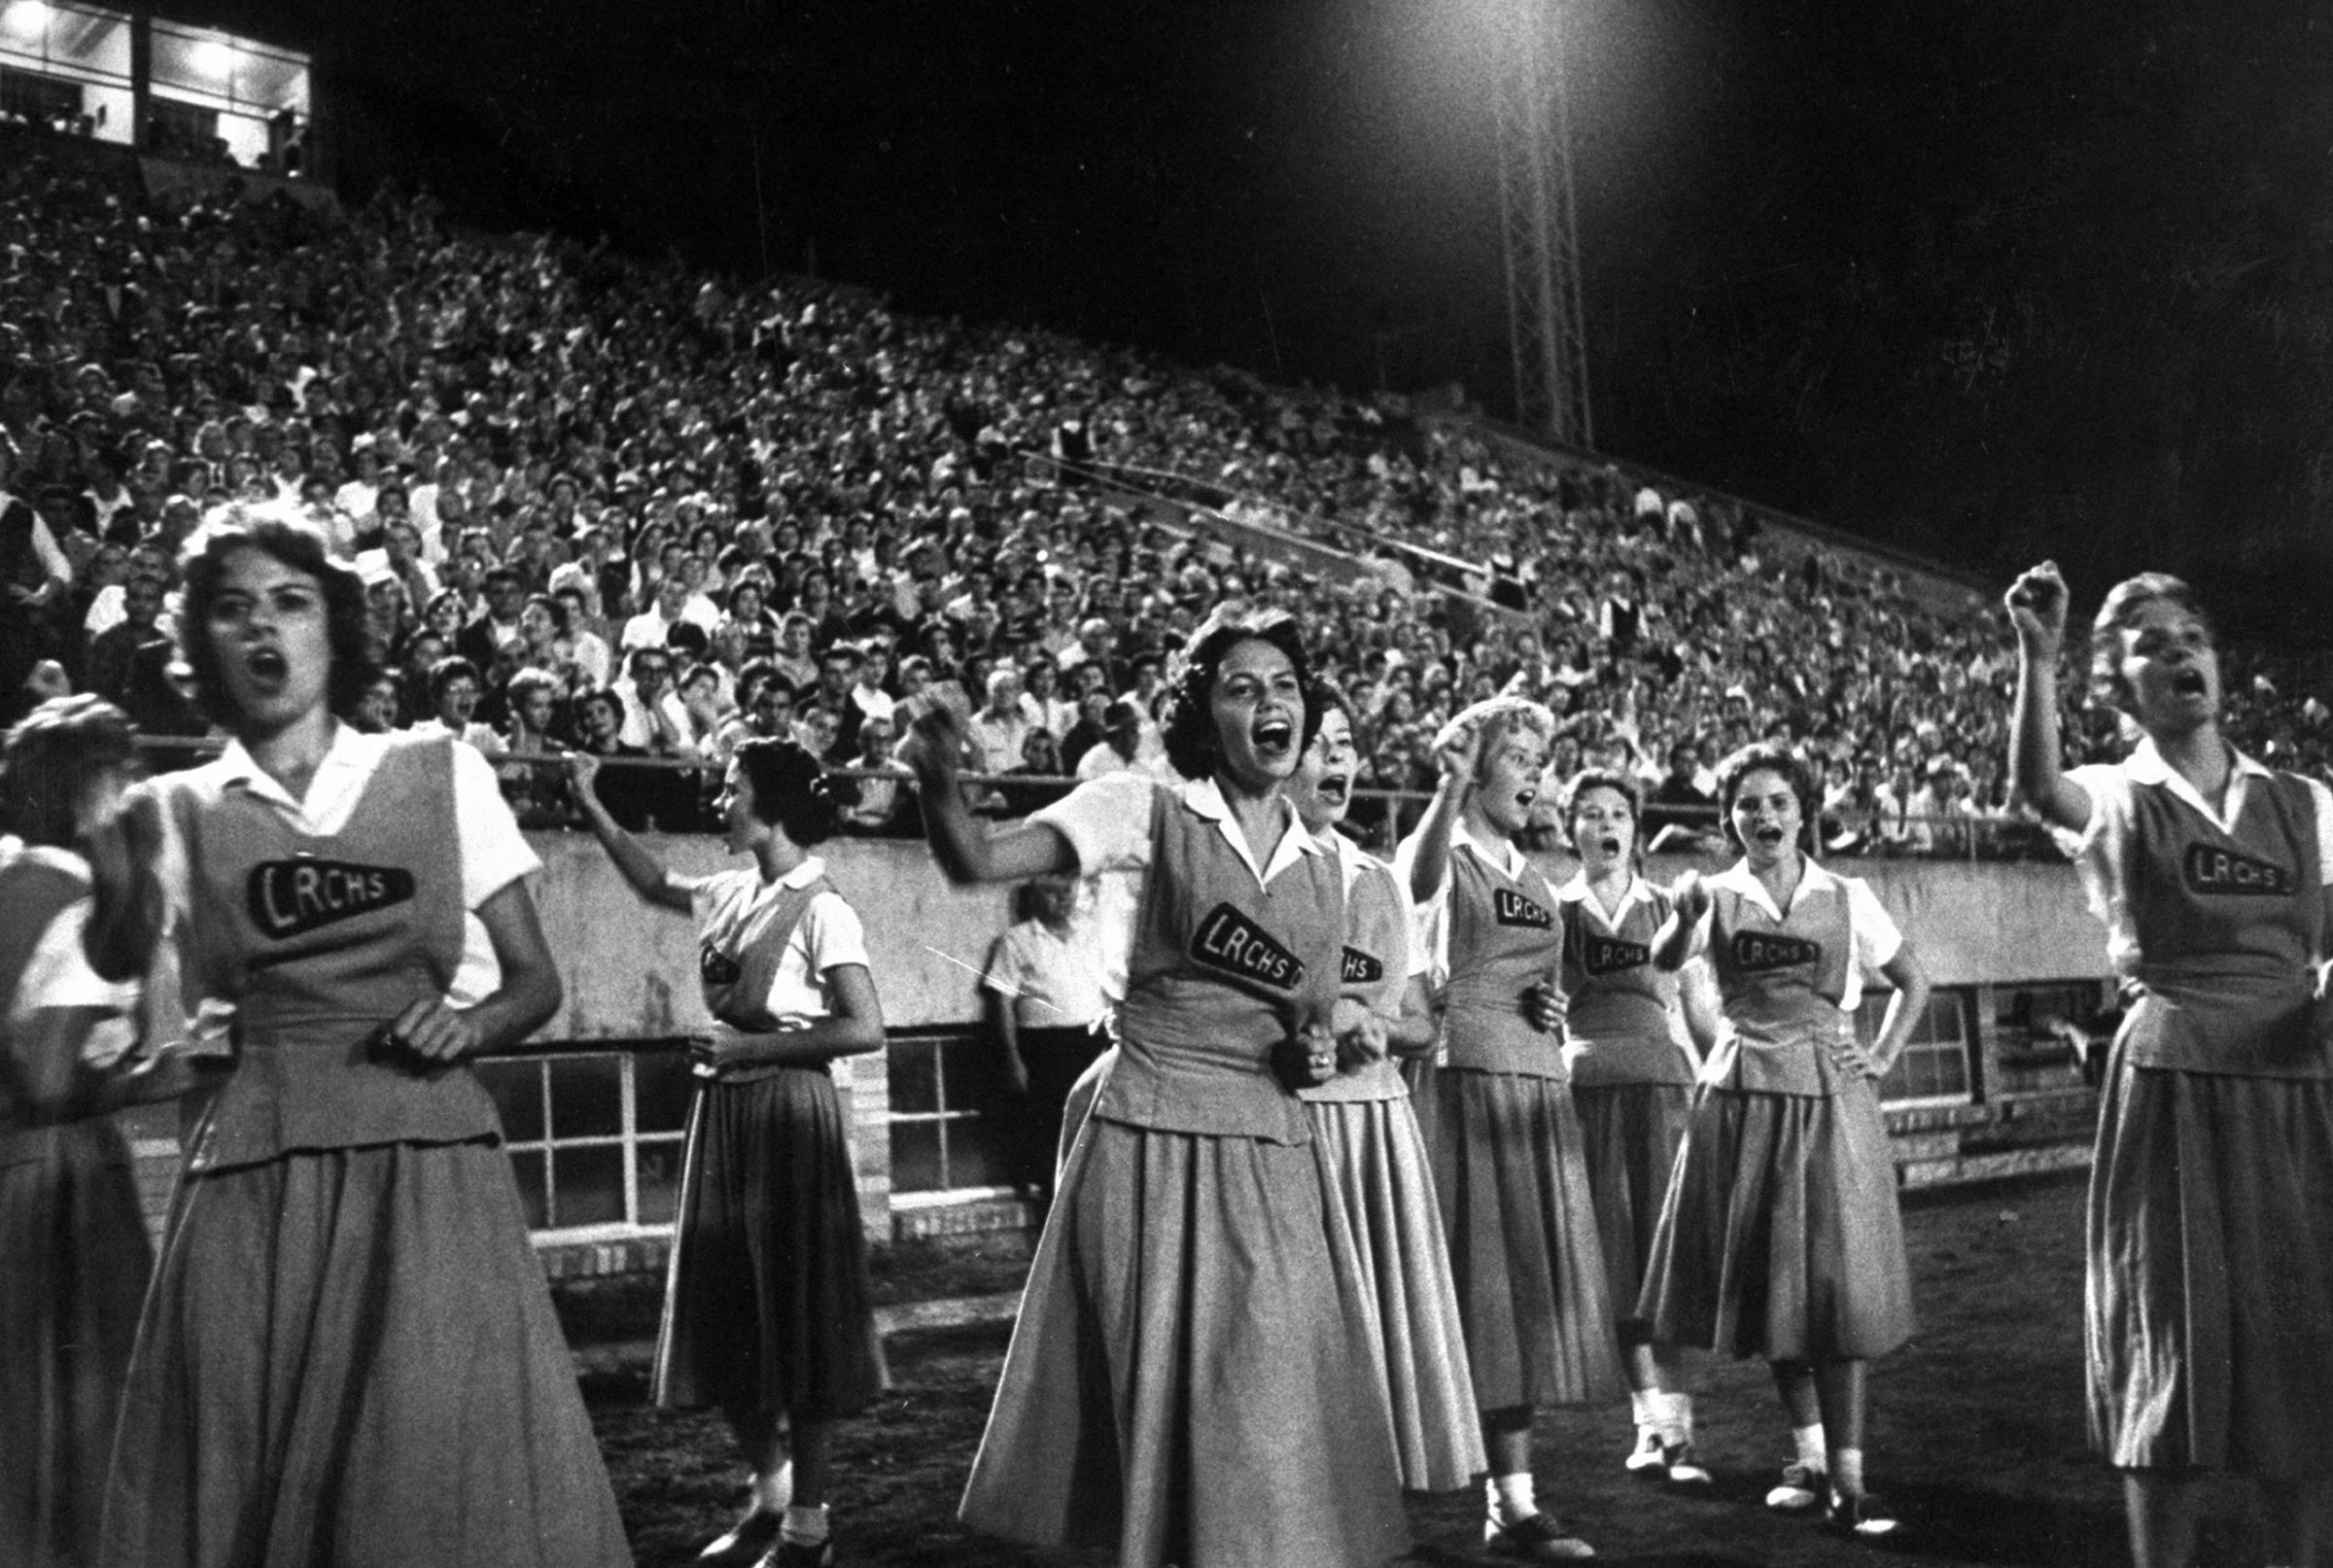 Cheerleaders at Little Rock high school game with Louisiana high school team, 1958.